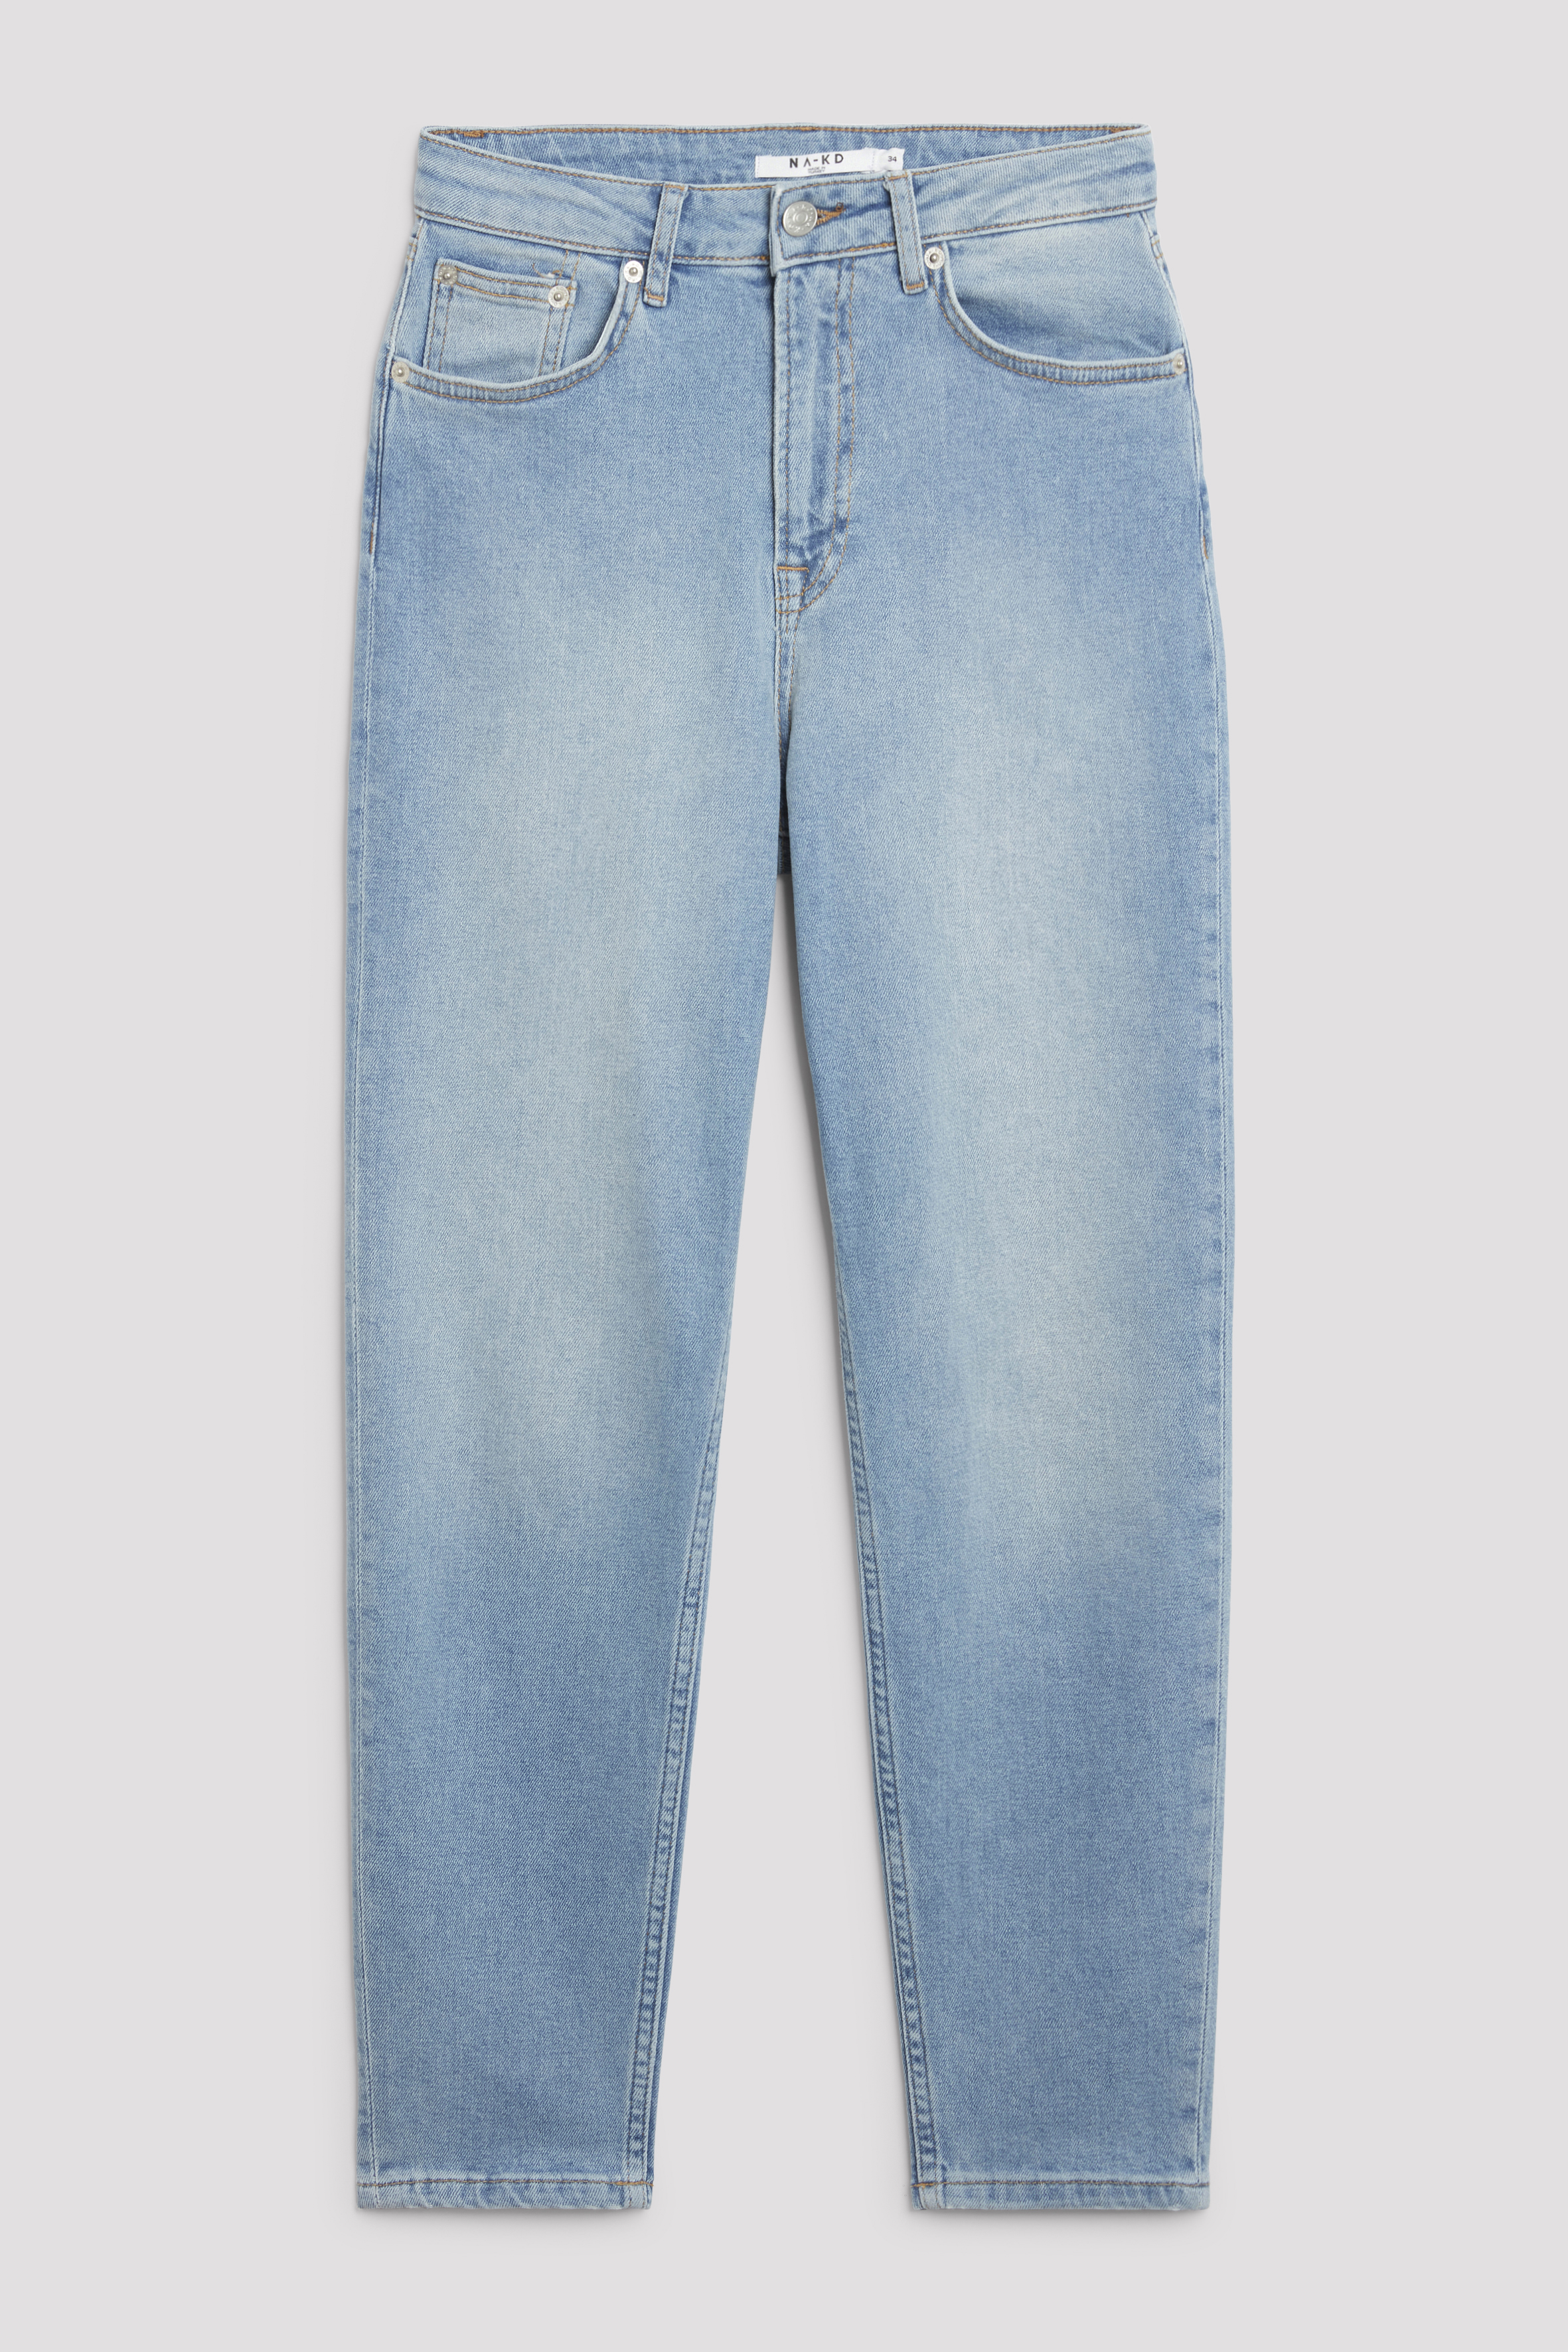 Mode Spijkerbroeken Boyfriend jeans Zara Basic Boyfriend jeans blauw casual uitstraling 